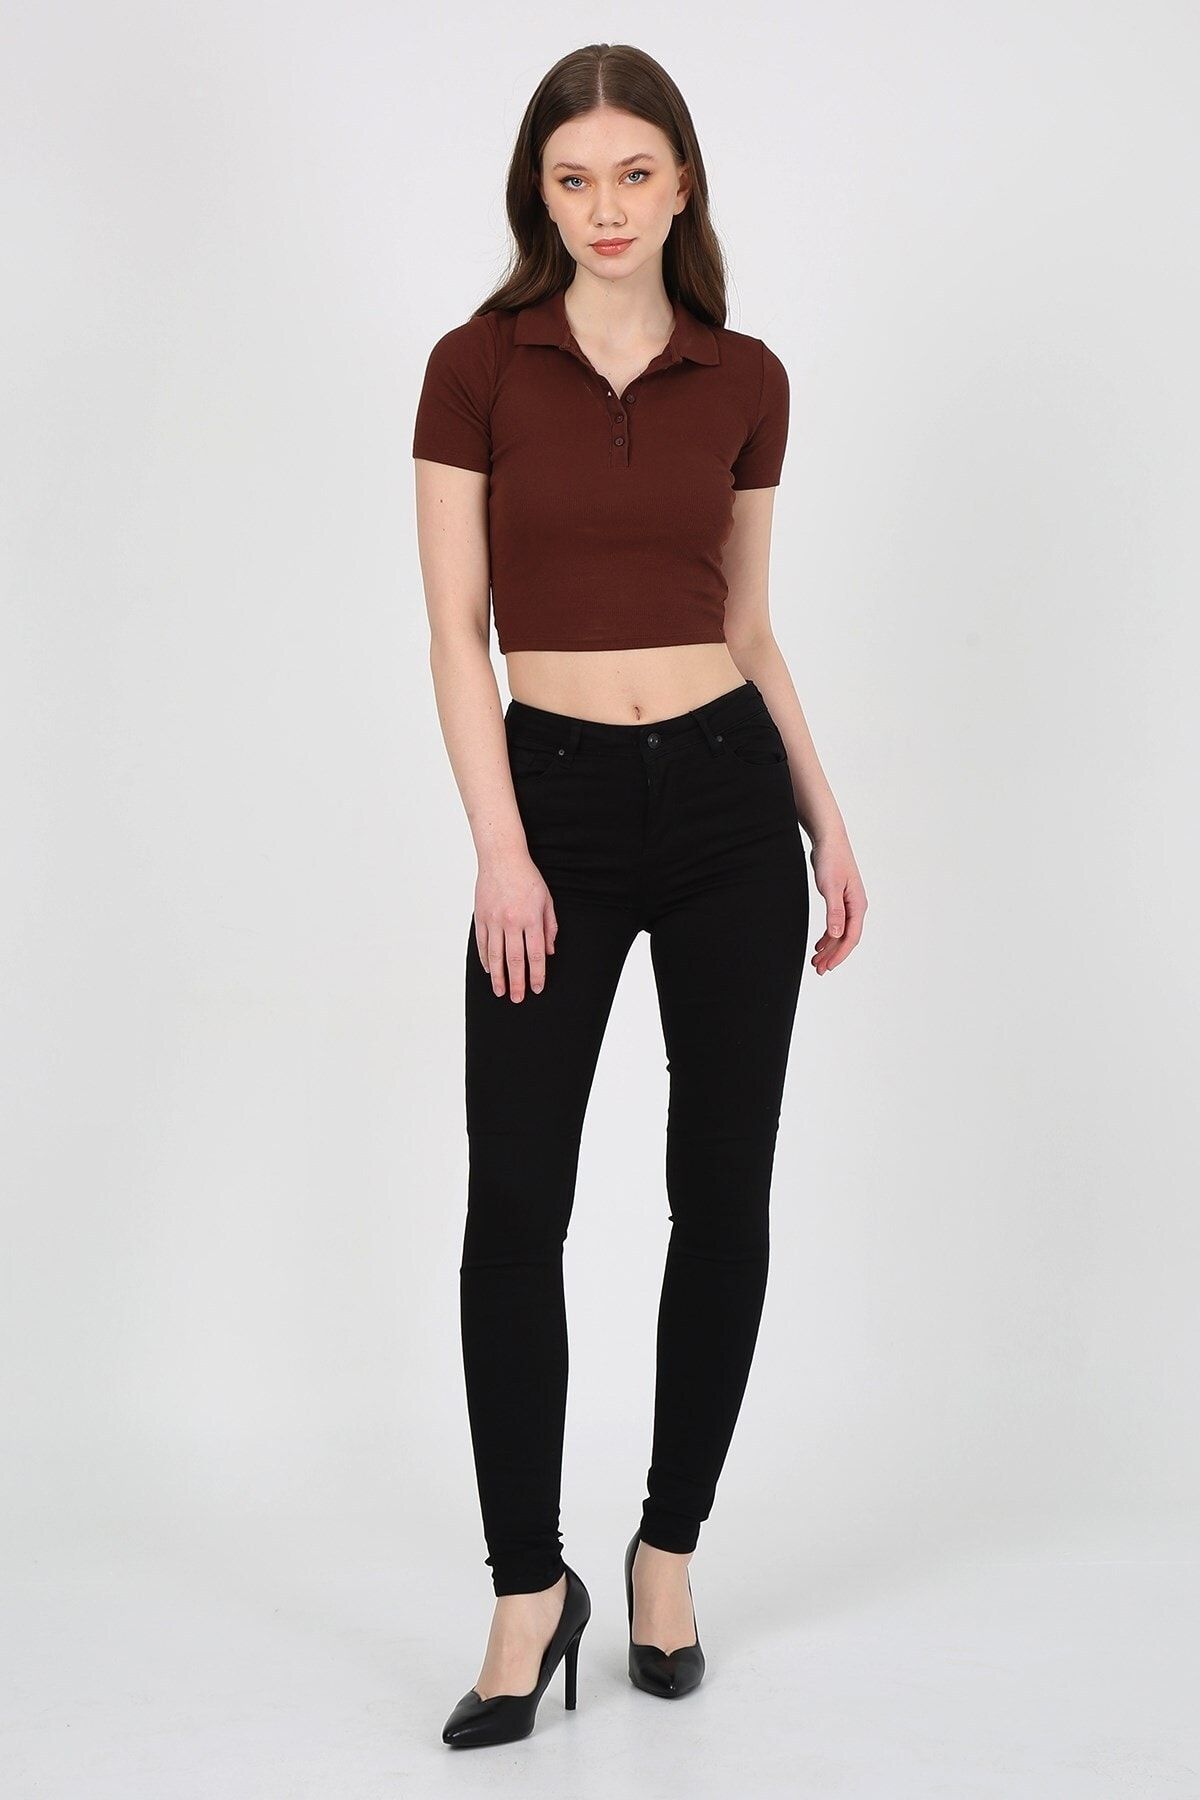 Twister Jeans Kadın Slim Fit Yüksek Bel Dar Paça Büyük Beden Kot Pantolon Mindy 9205-03 Bb Black